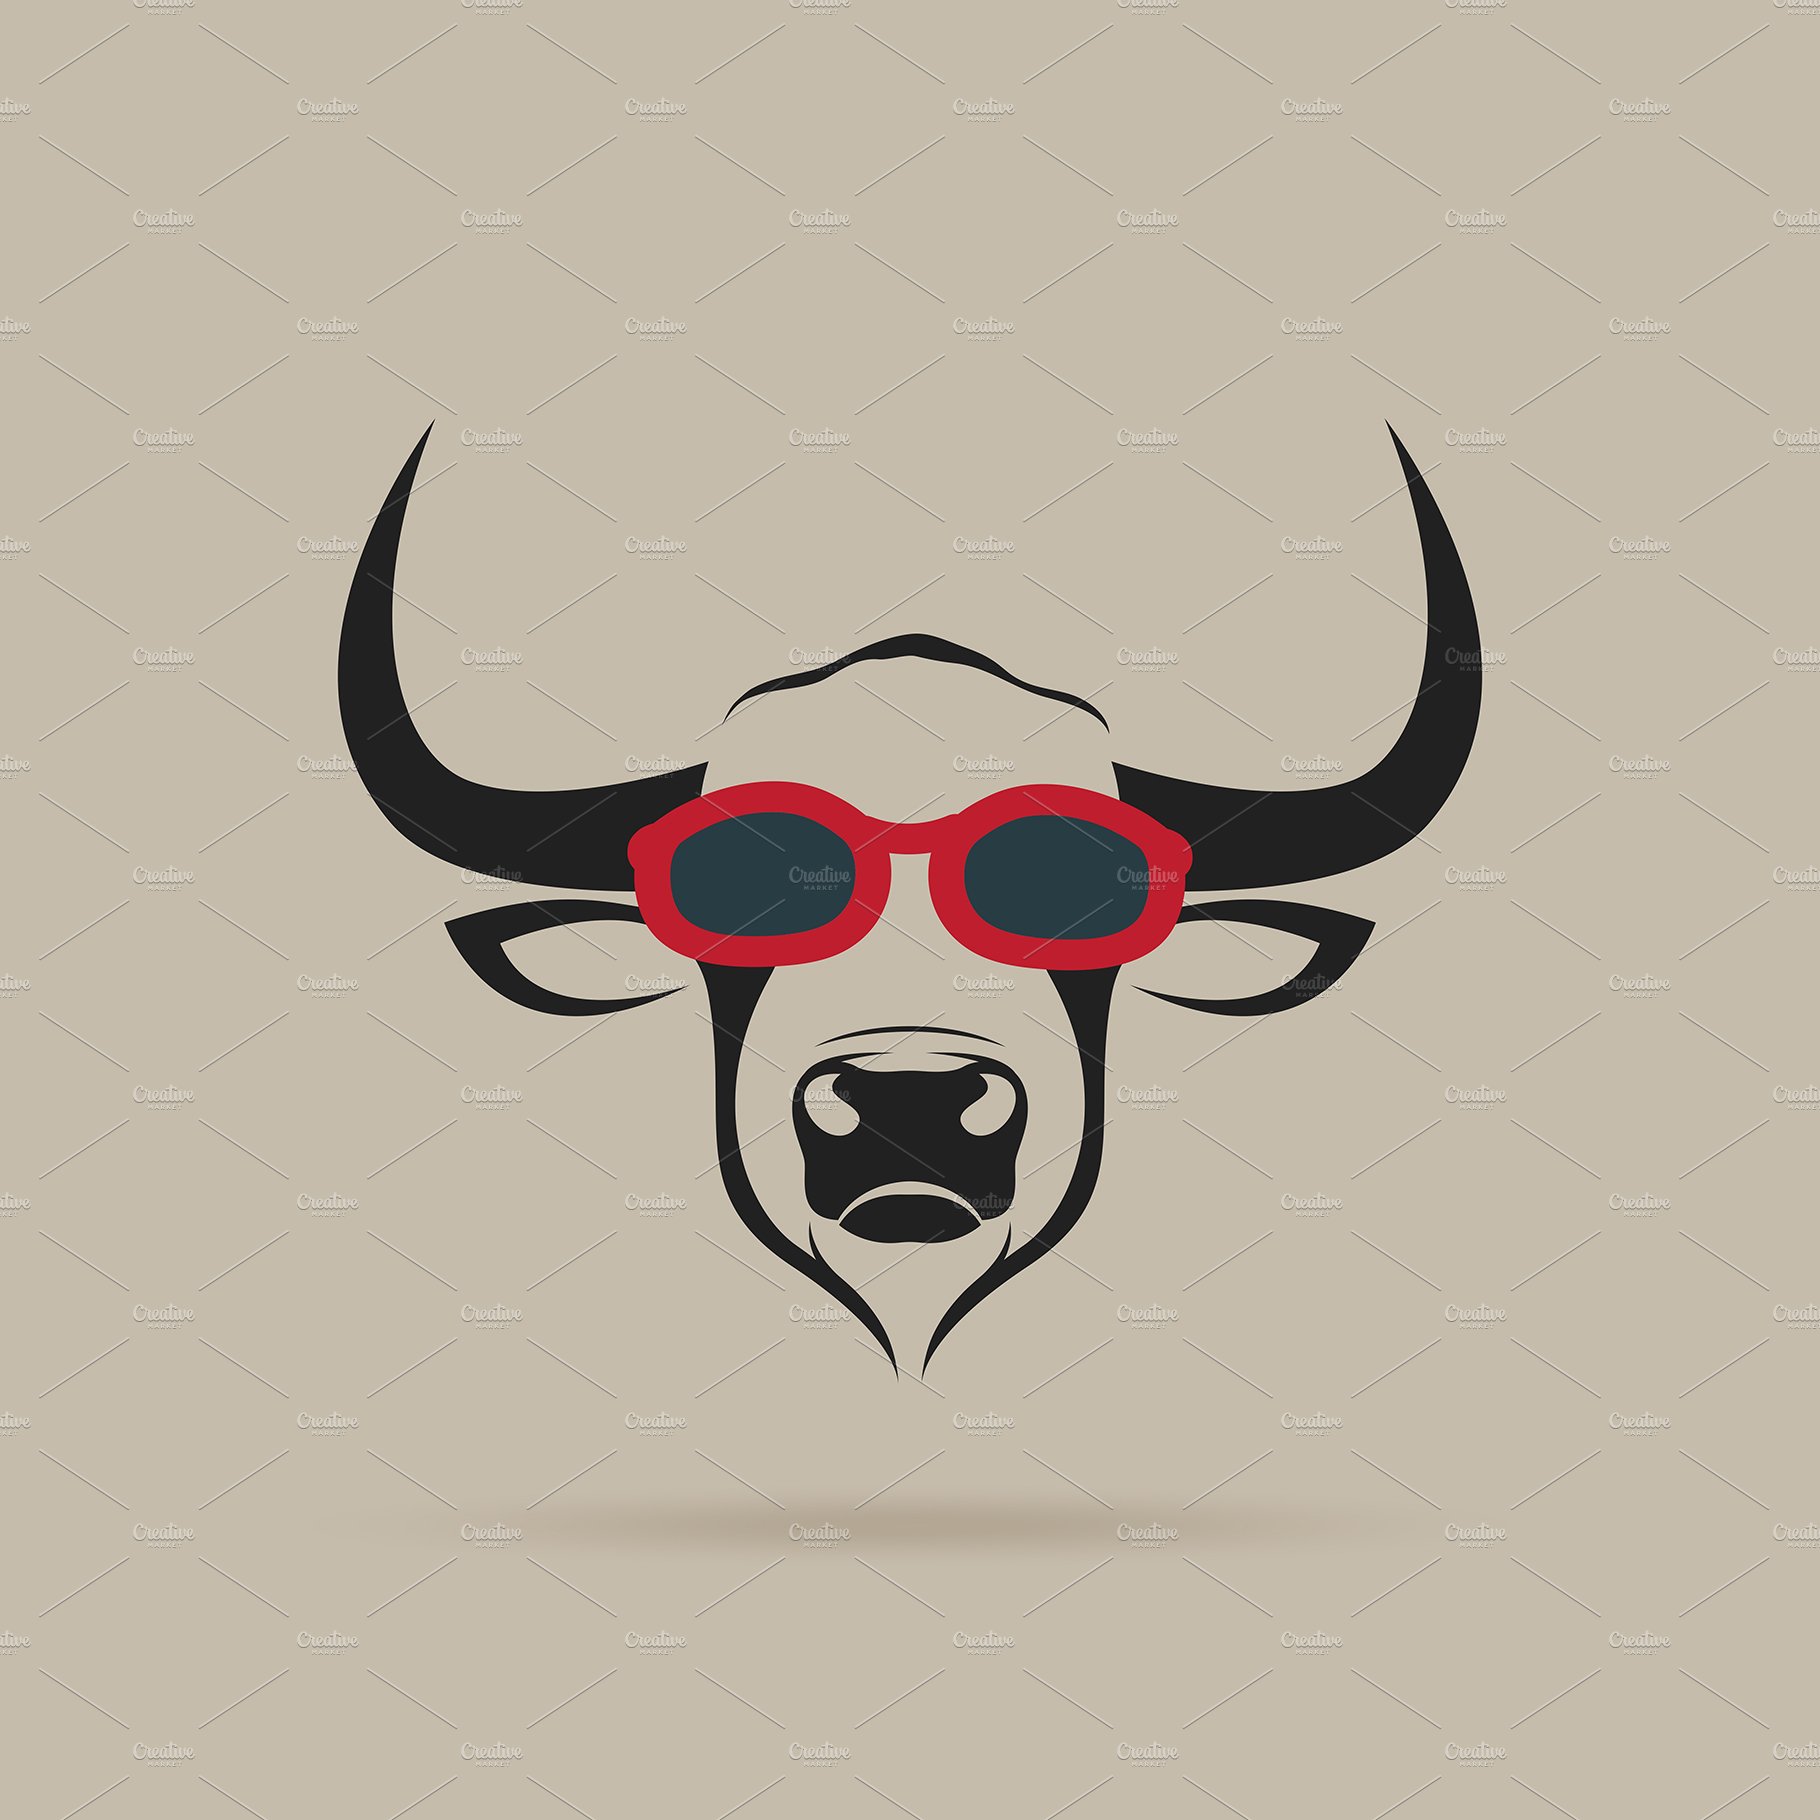 Bull head wearing sunglasses. Animal cover image.